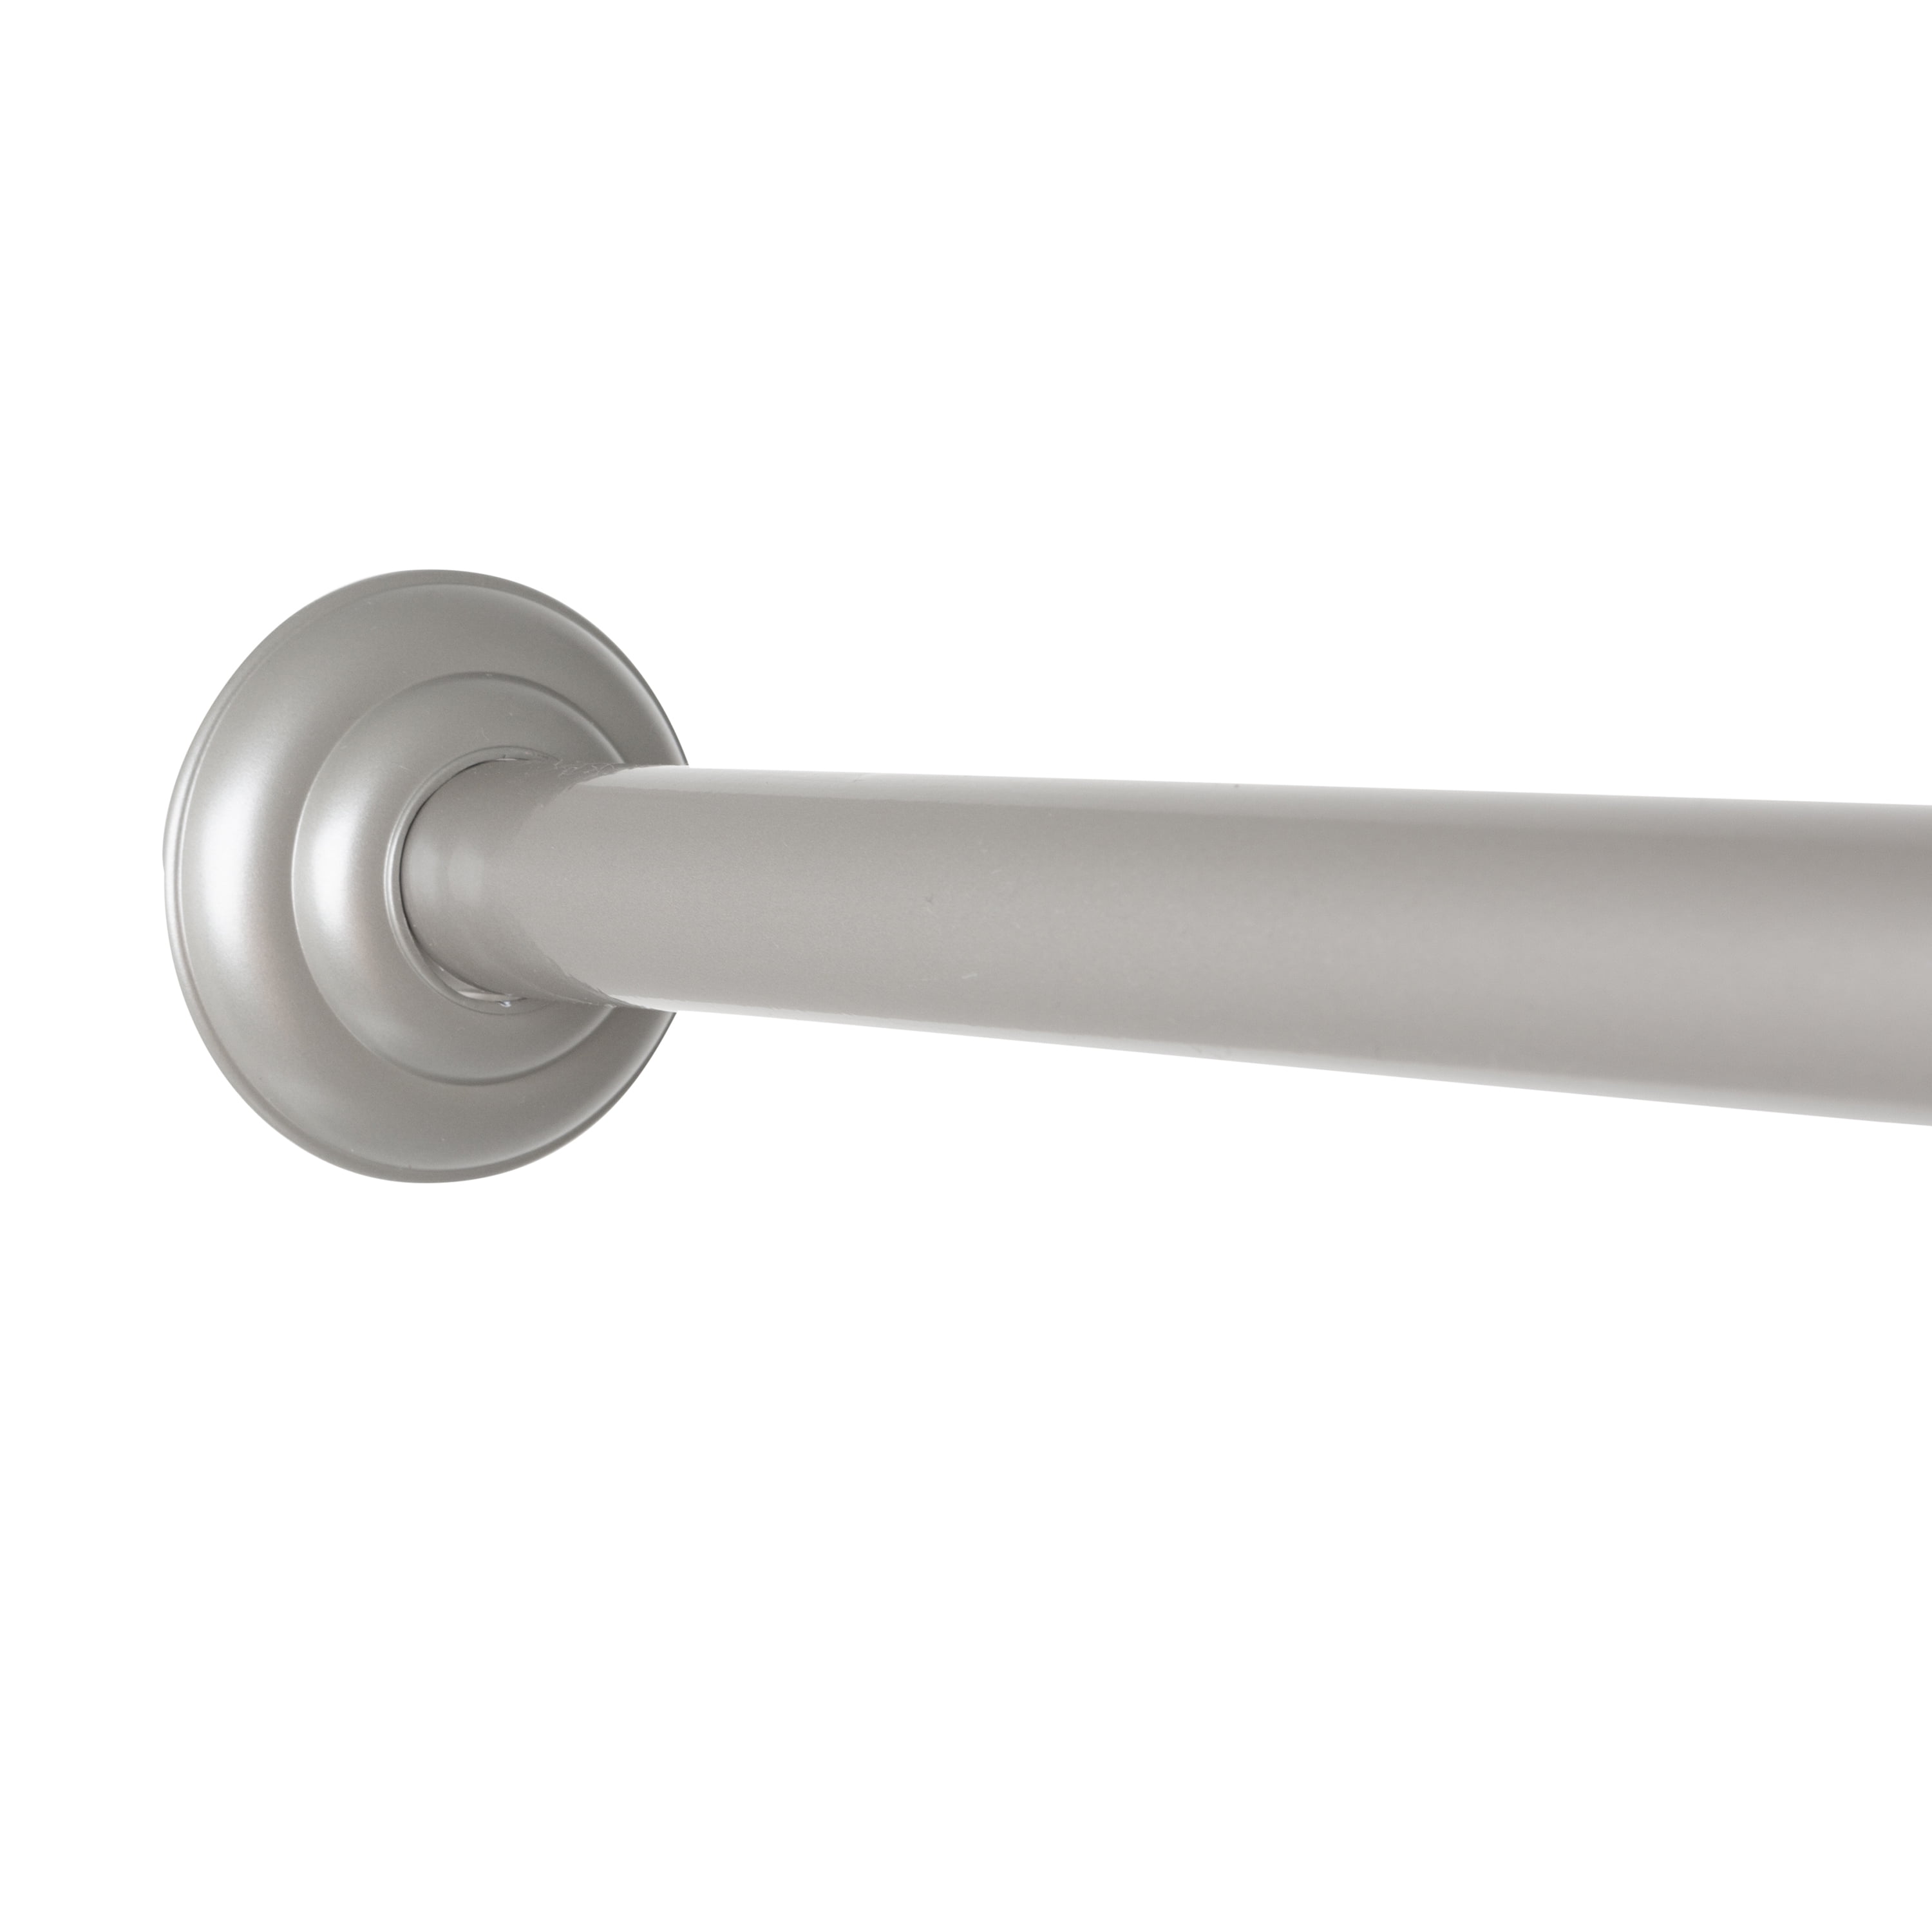 Mainstays Permanent Mount Straight Metal Shower Curtain Rod, Adjustable 41" - 72", Nickel